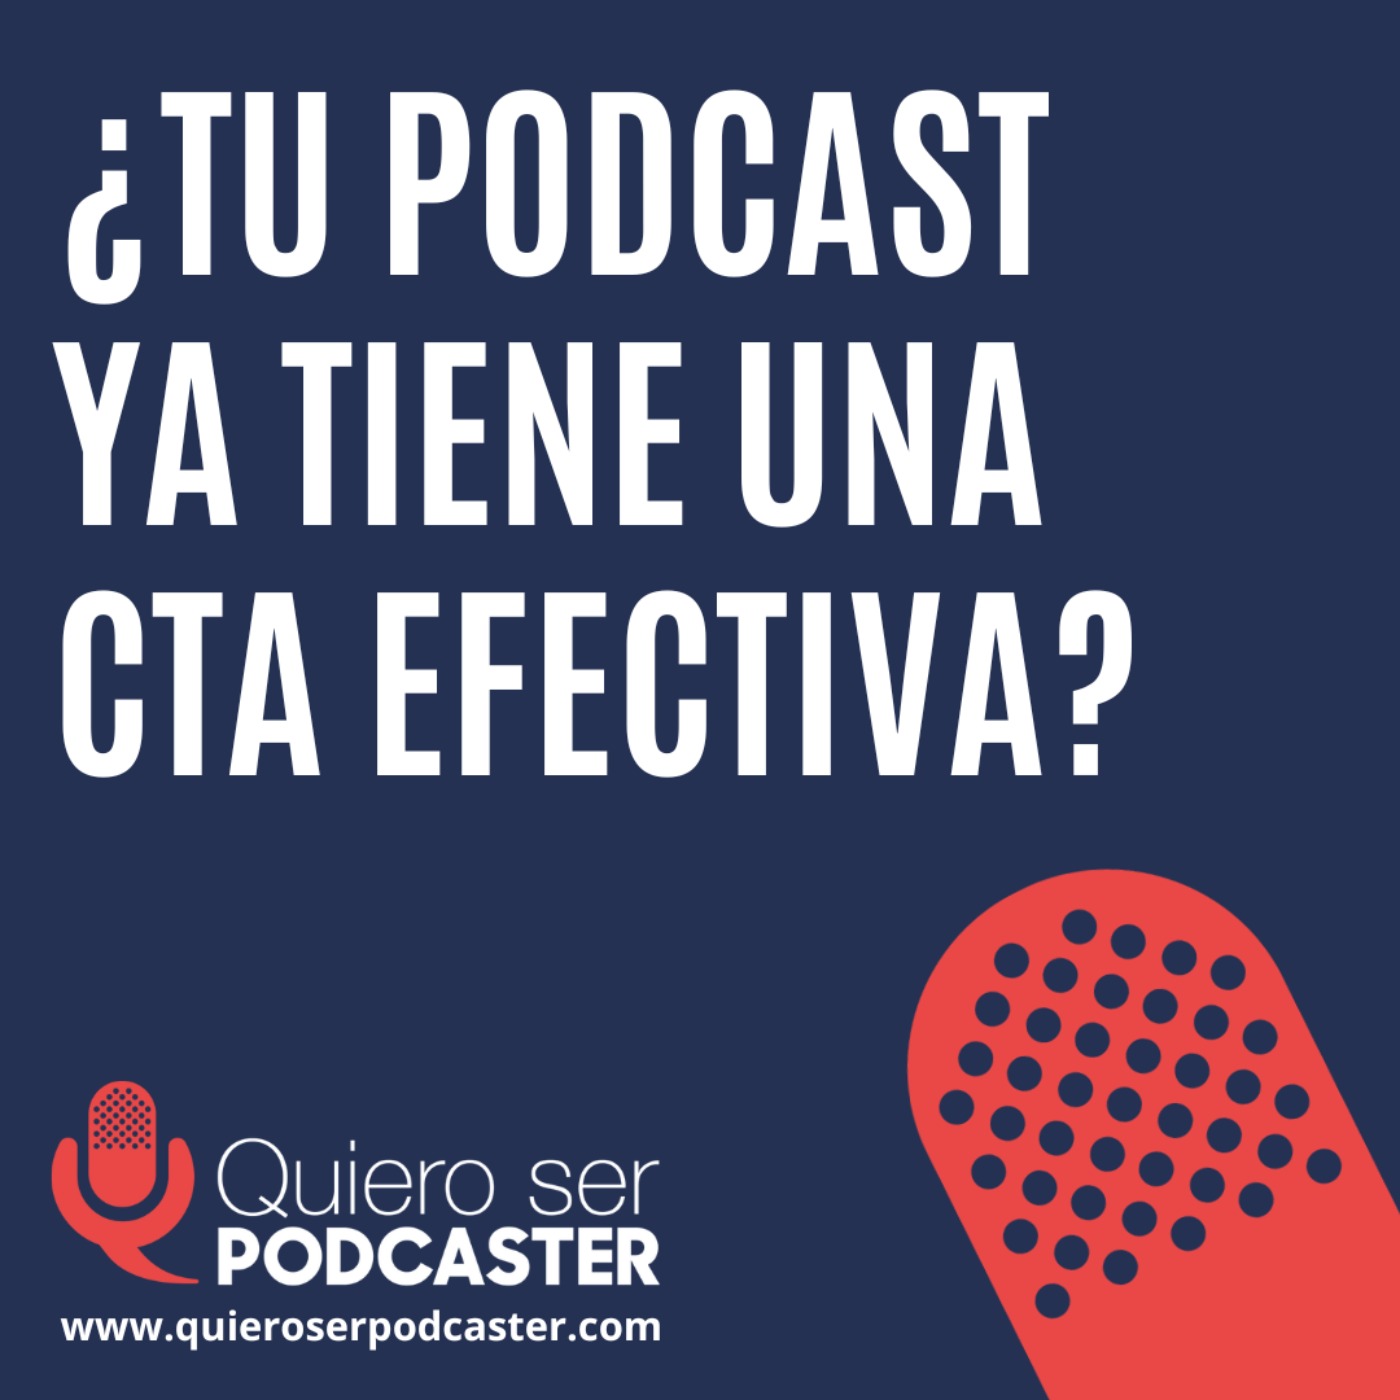 ¿Tu podcast tiene una CTA efectiva?